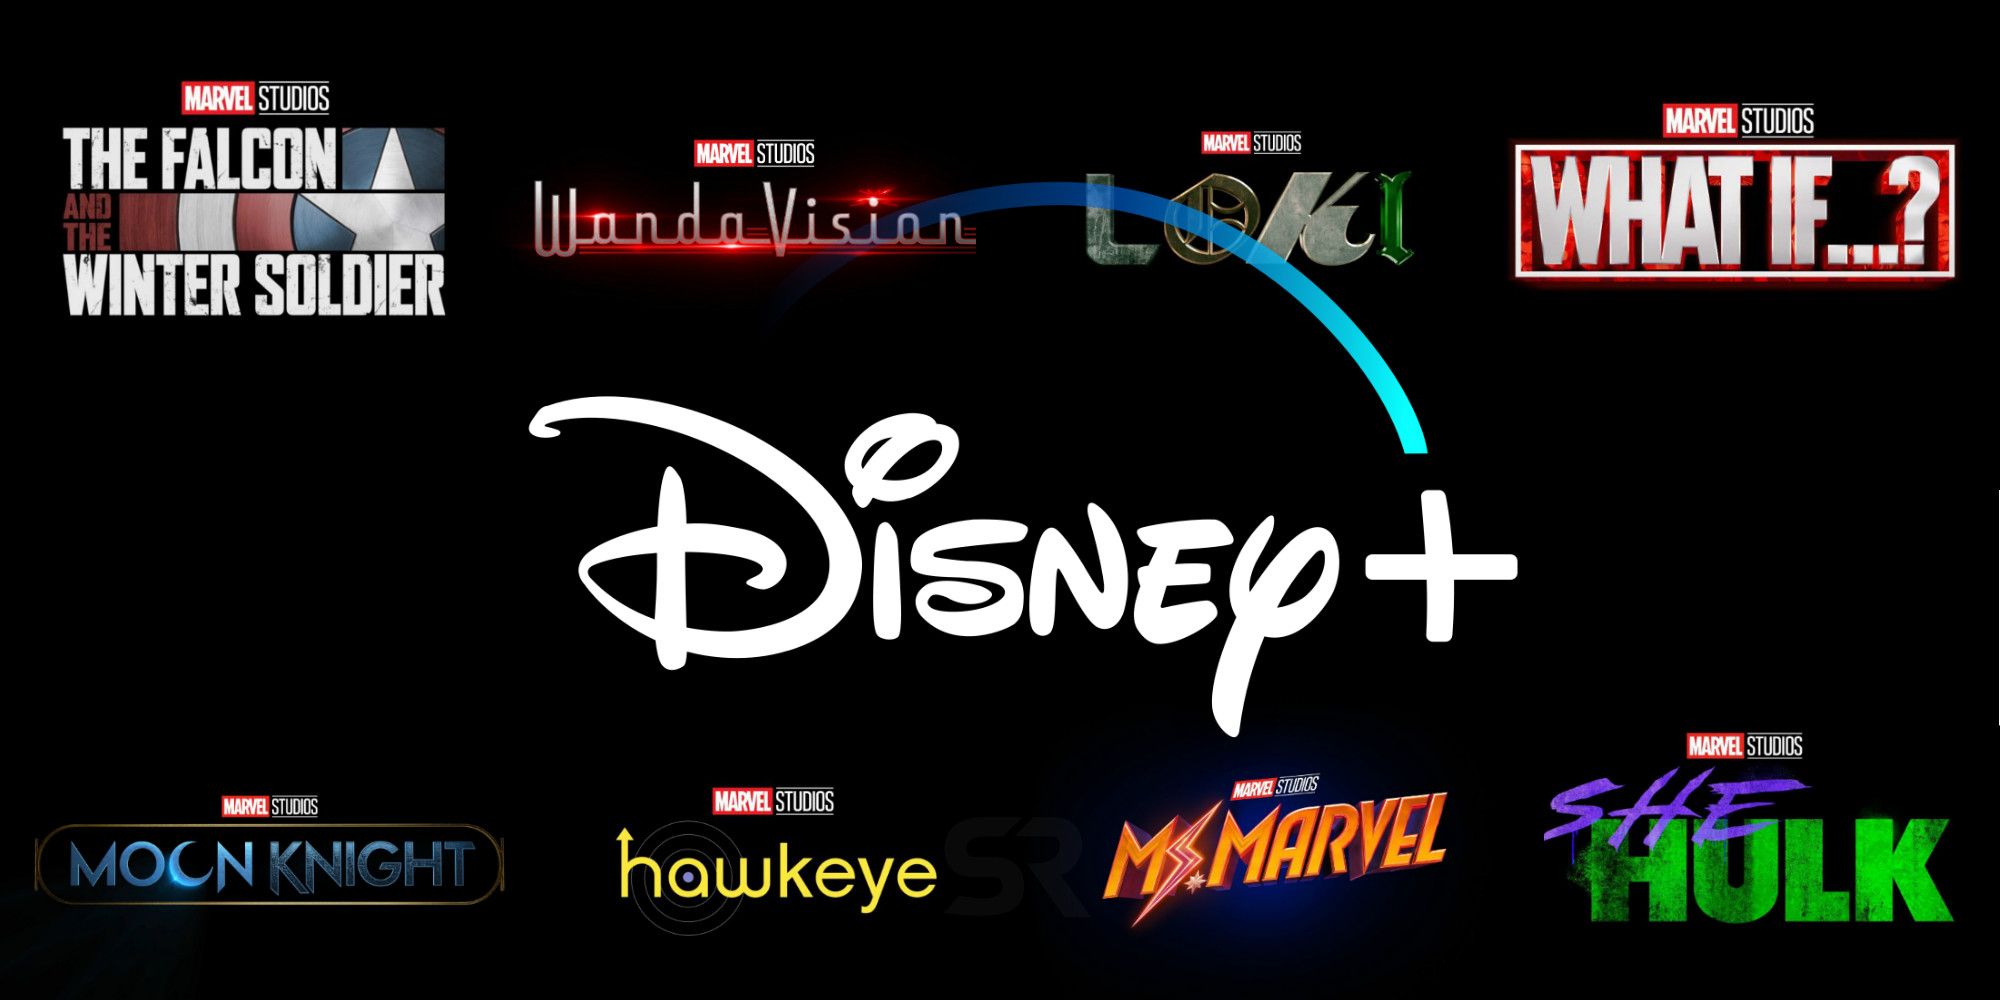 Marvel’s She-Hulk & Moon Knight Disney+ Series Find Their Lead Writers